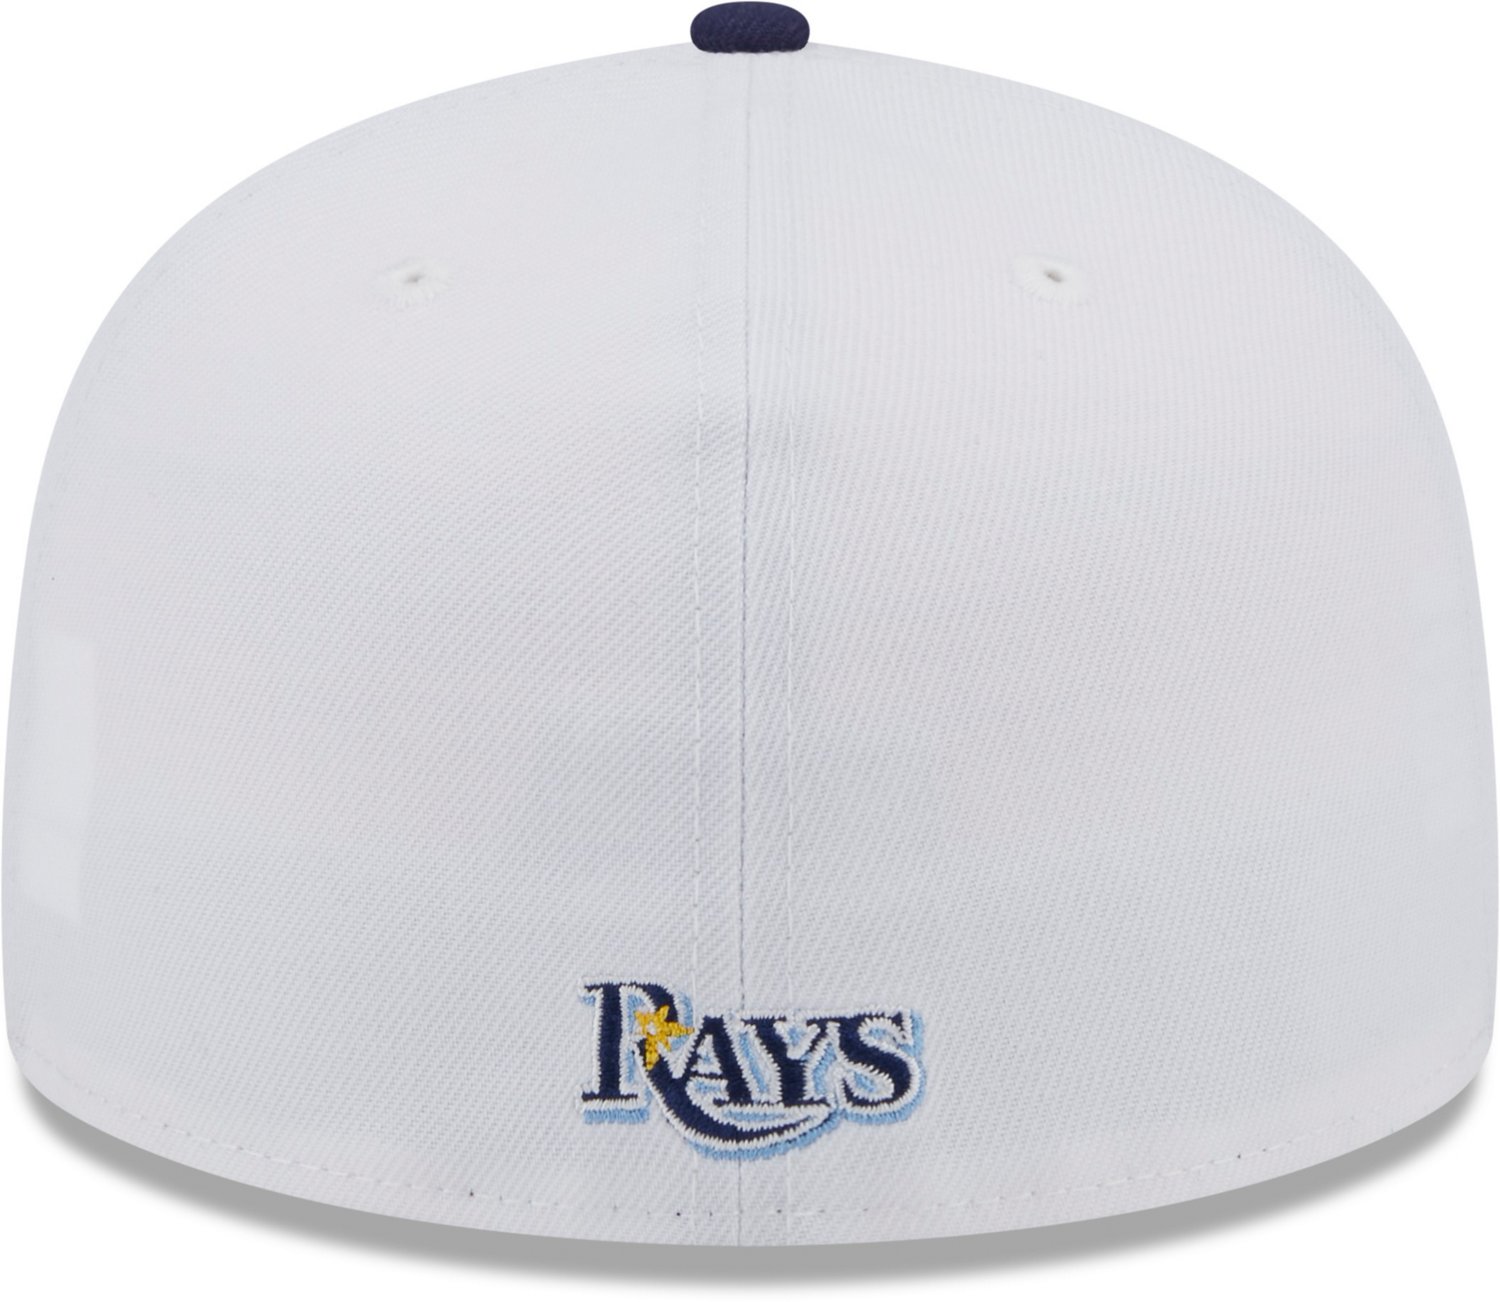 New Era Men's Tampa Bay Rays MLB Batting Practice 59FIFTY Cap Black, Large/X-Large - MLB Caps at Academy Sports